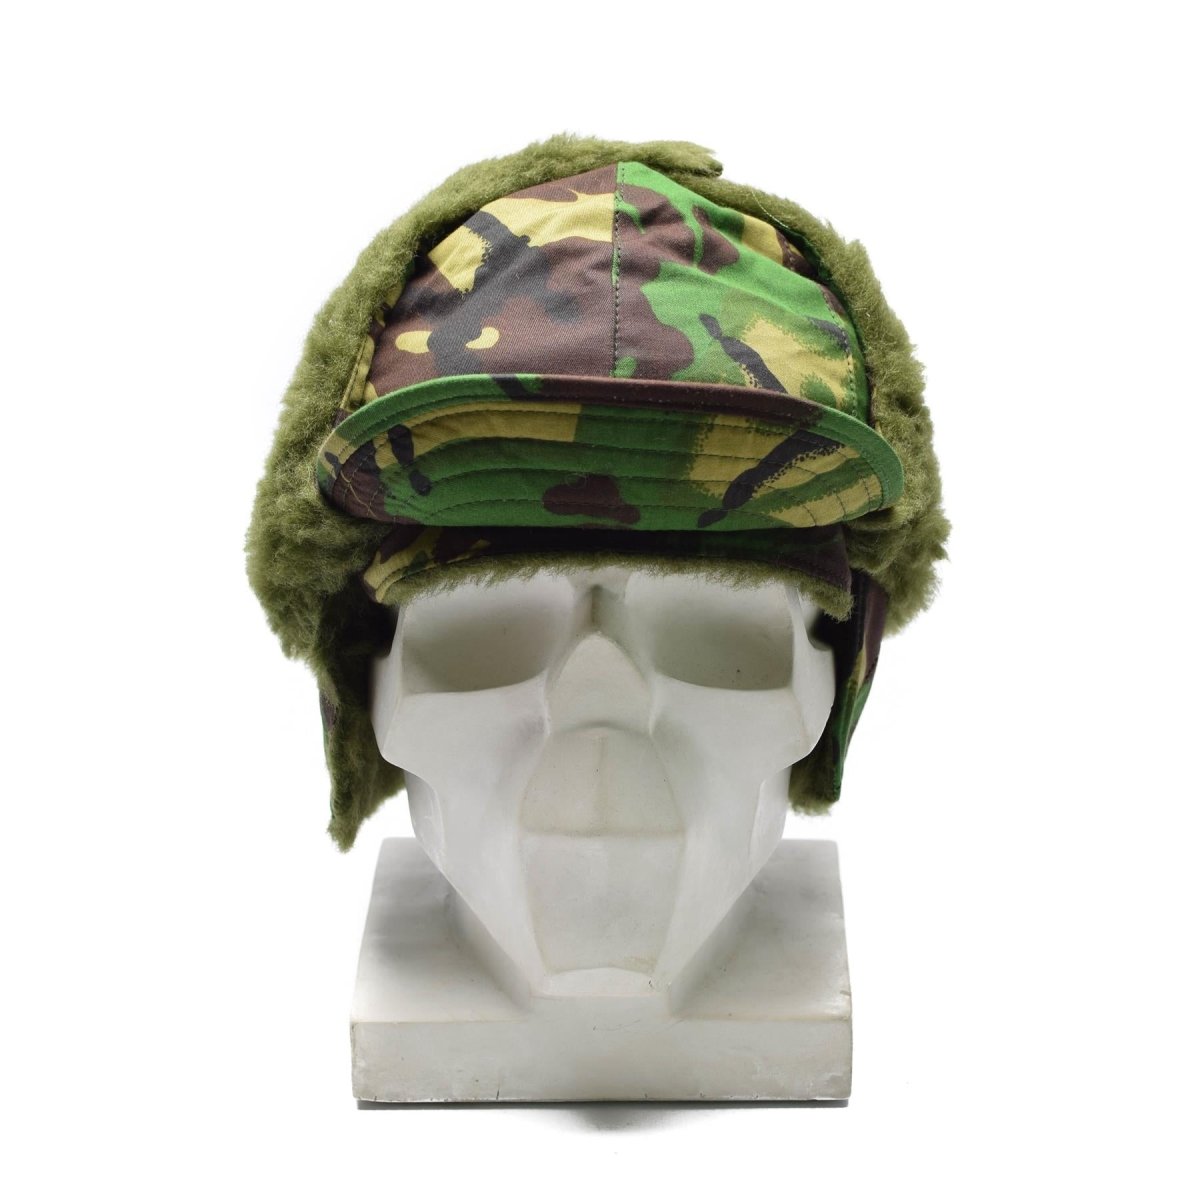 Original British army forces winter hat folding ears DPM woodland